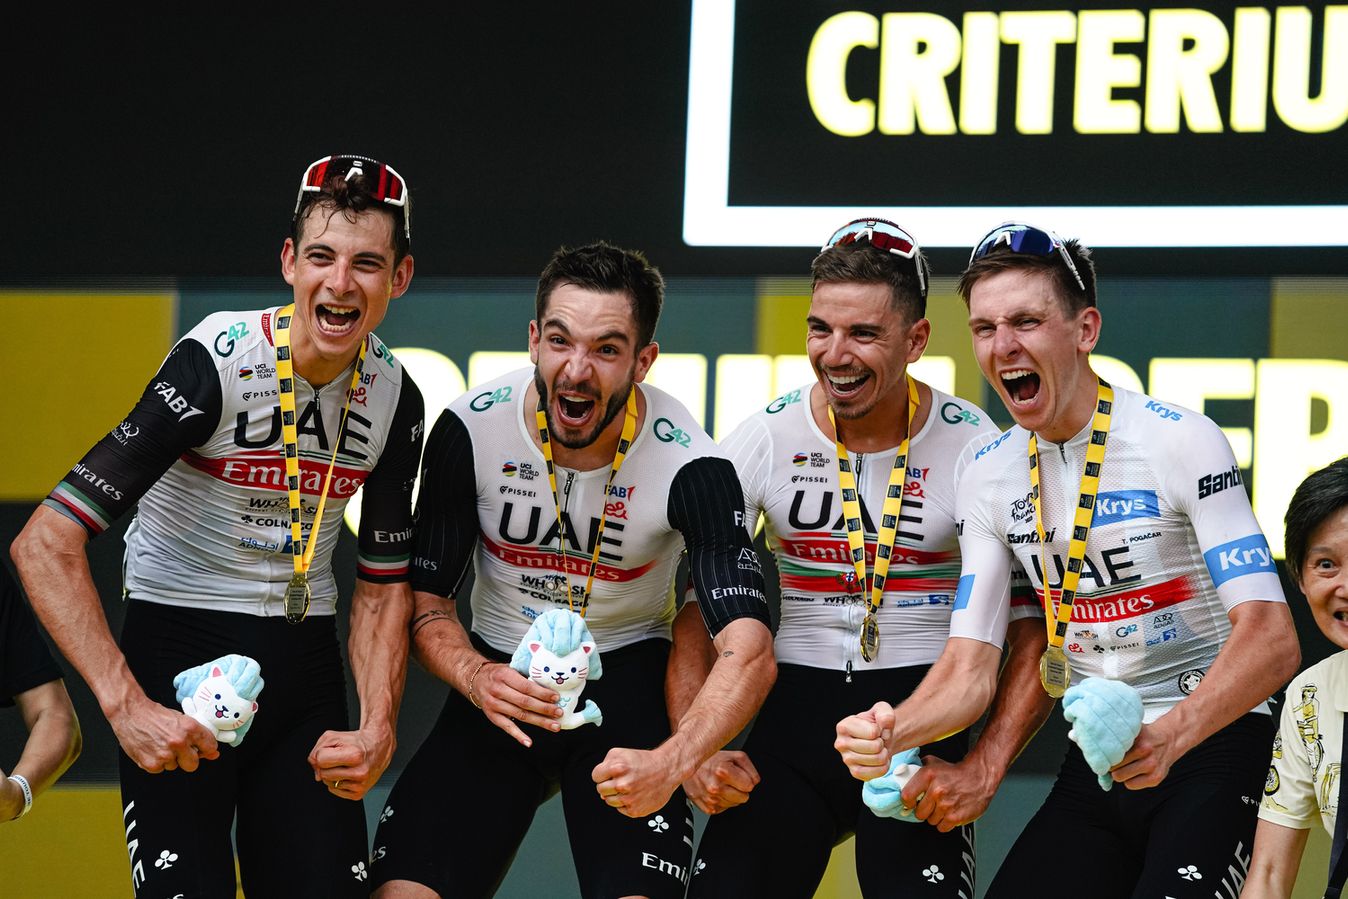 UAE Team Emirates celebrate winning the team time trial event at the Tour de France Prudential Singapore Criterium 